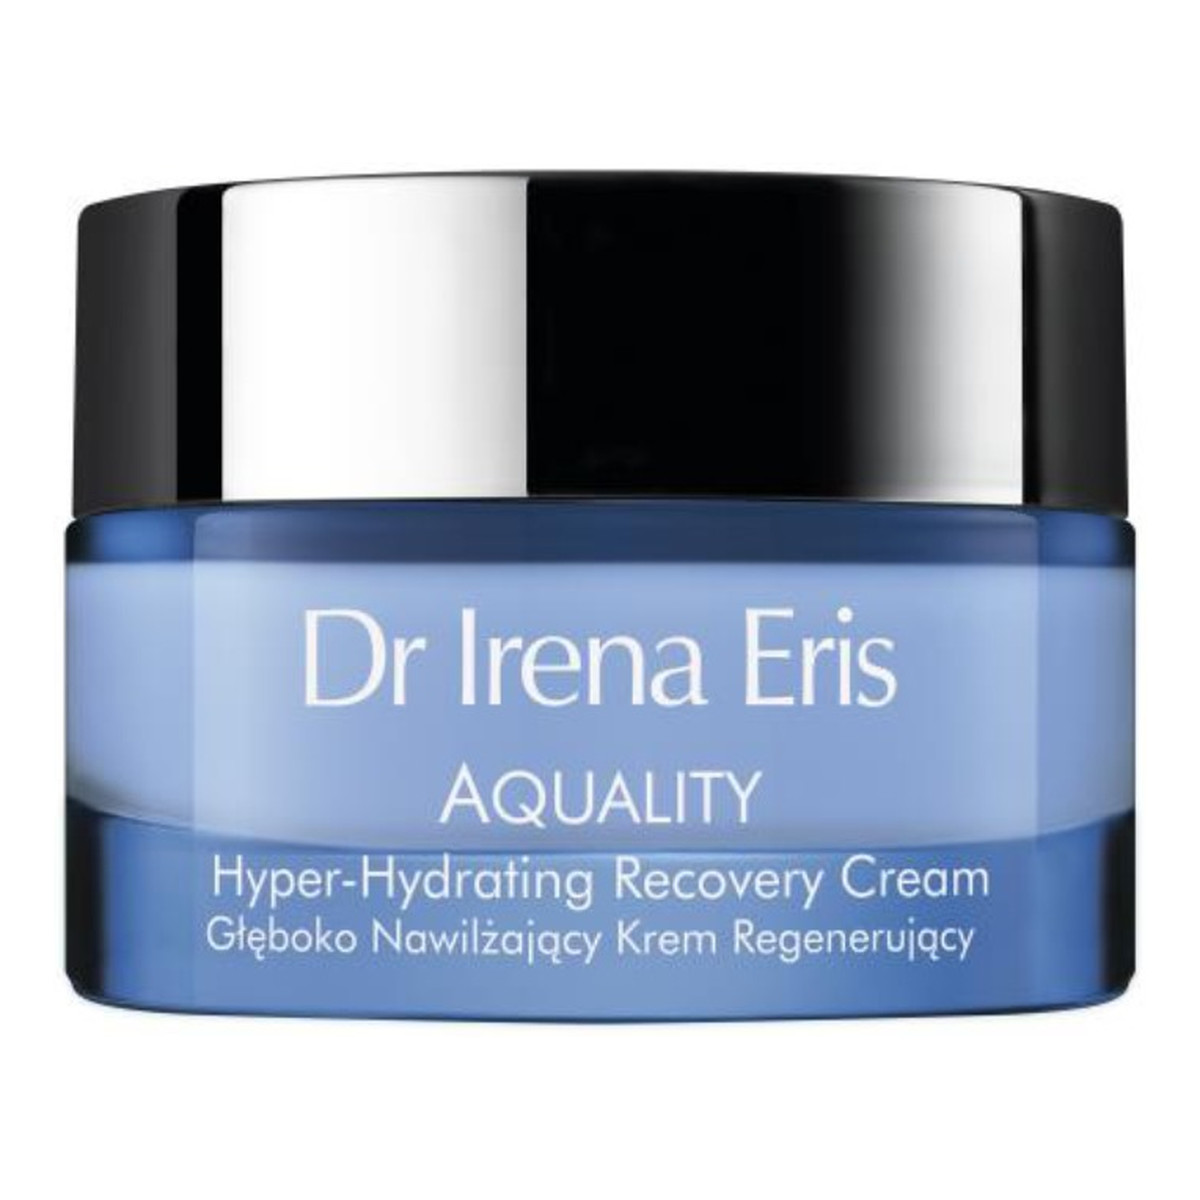 Dr Irena Eris Aquality Hyper-Hydrating Recovery Cream Krem do twarzy 50ml